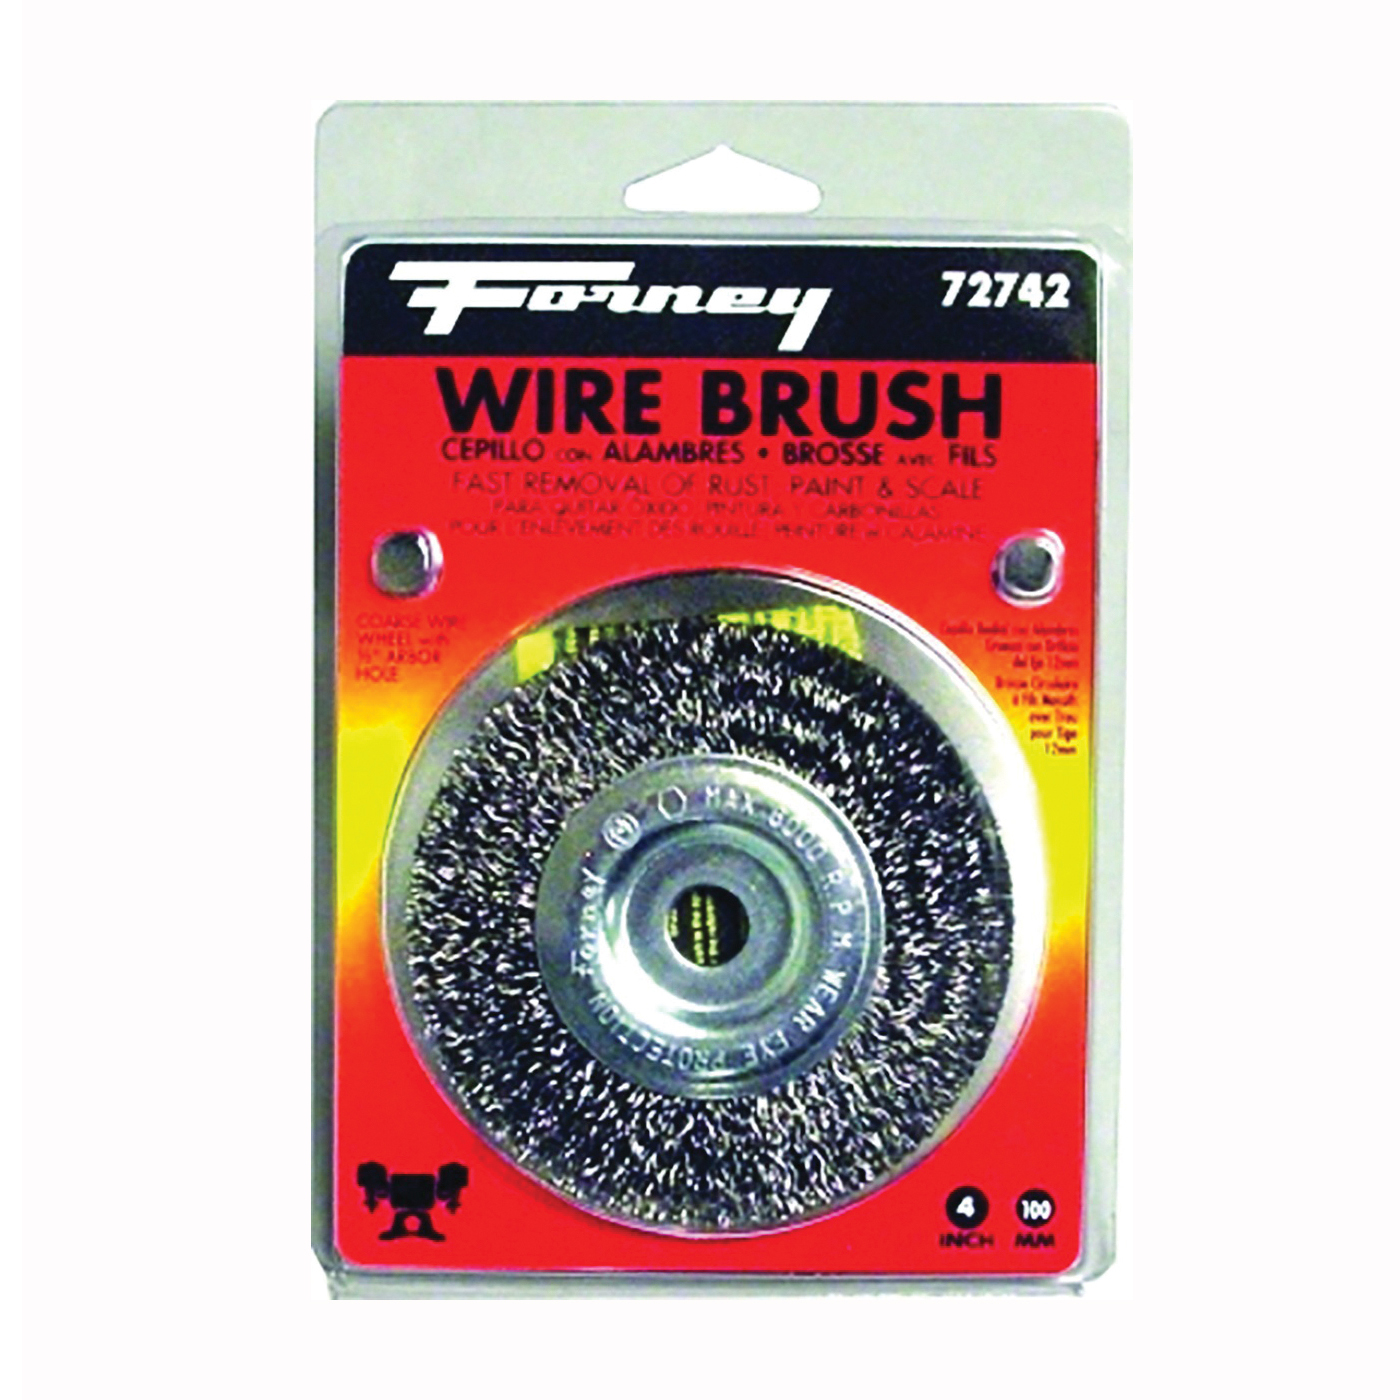 72742 Wire Wheel Brush, 4 in Dia, 1/2 in Arbor/Shank, 0.012 in Dia Bristle